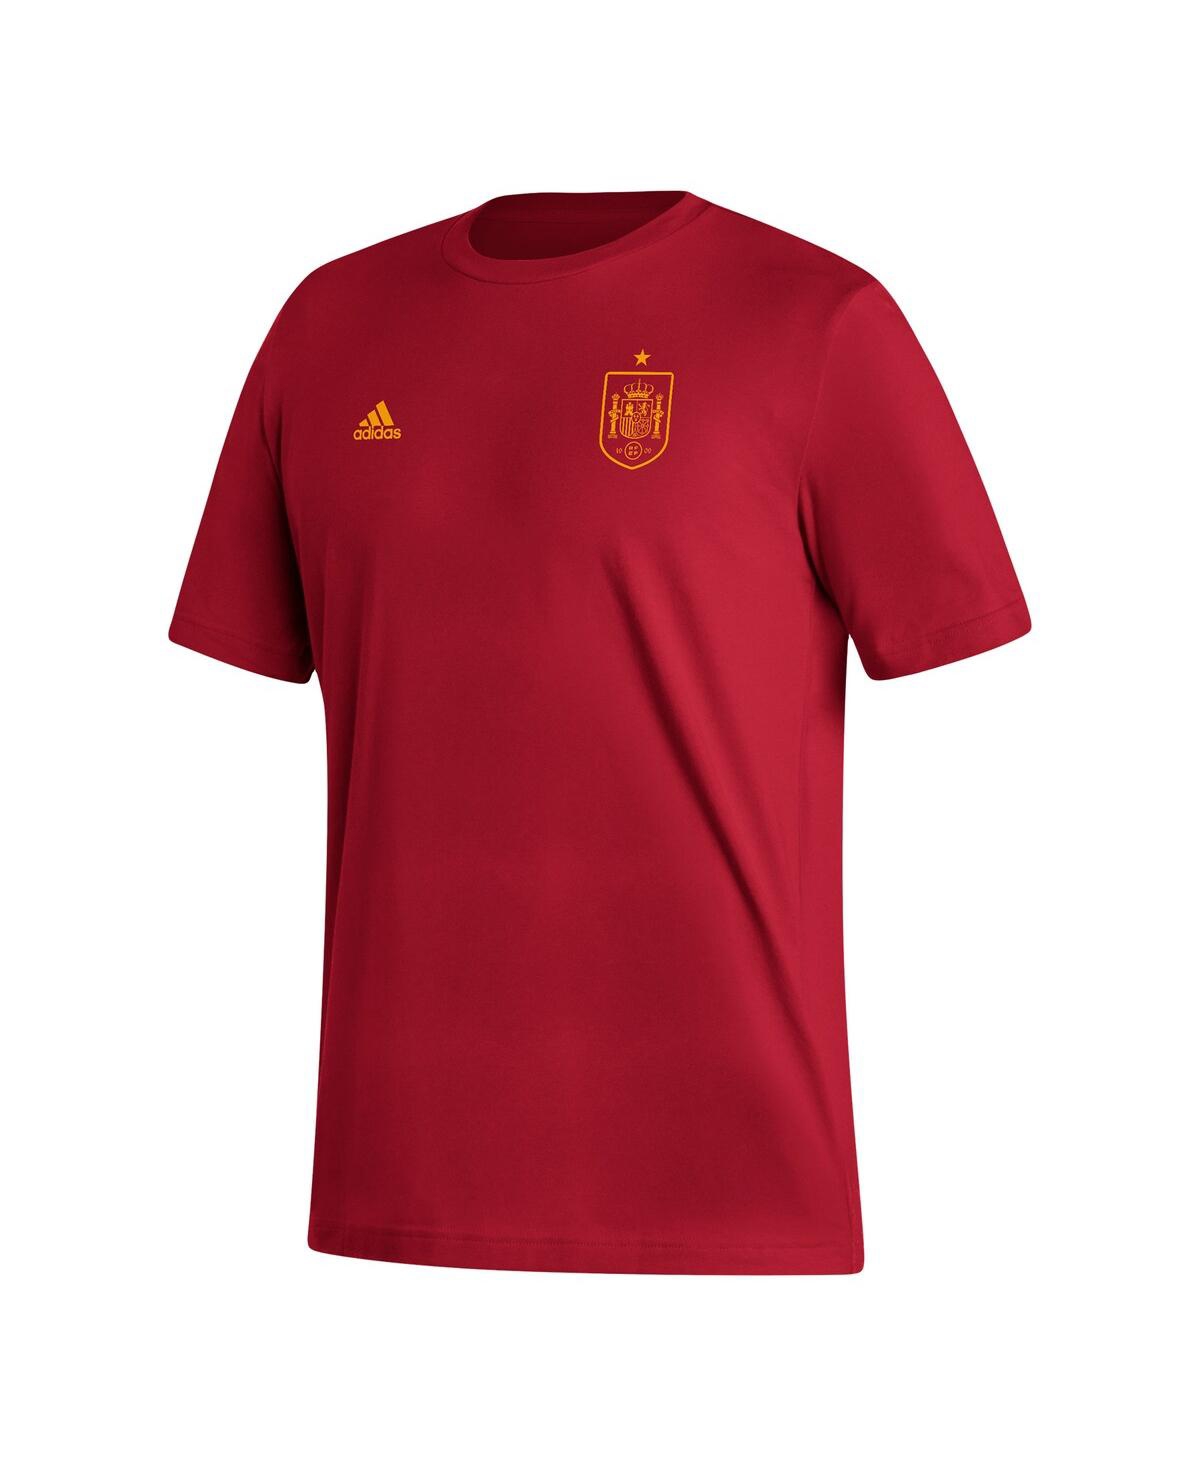 Shop Adidas Originals Men's Adidas Red Spain National Team Crest T-shirt